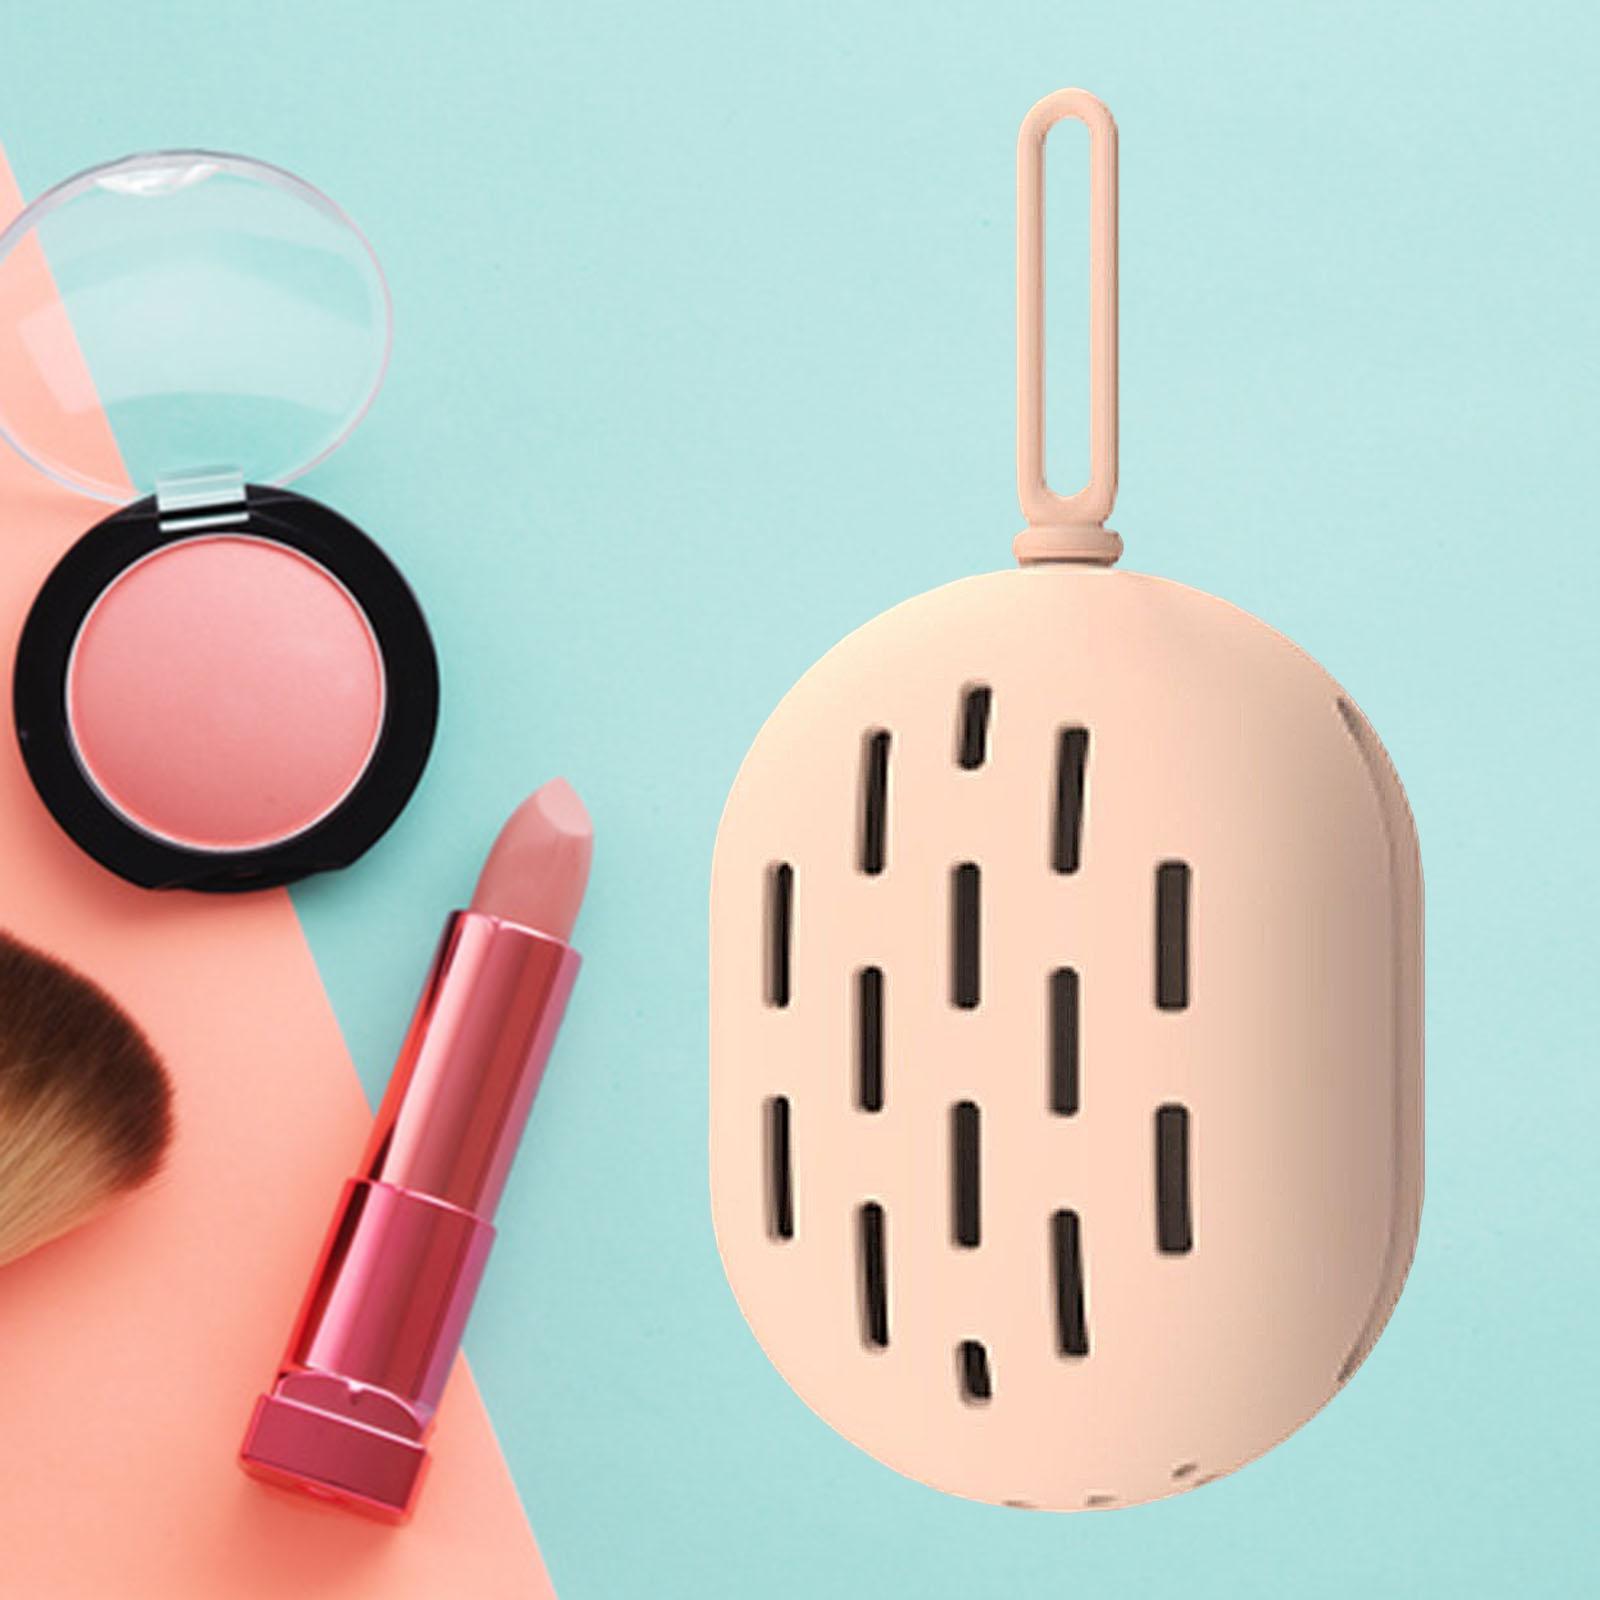 Makeup Sponge Holder Make up Blender Case Shatterproof Washable Reusable Double Side Hollow Container Organizer Dryer Rack for Cosmetics